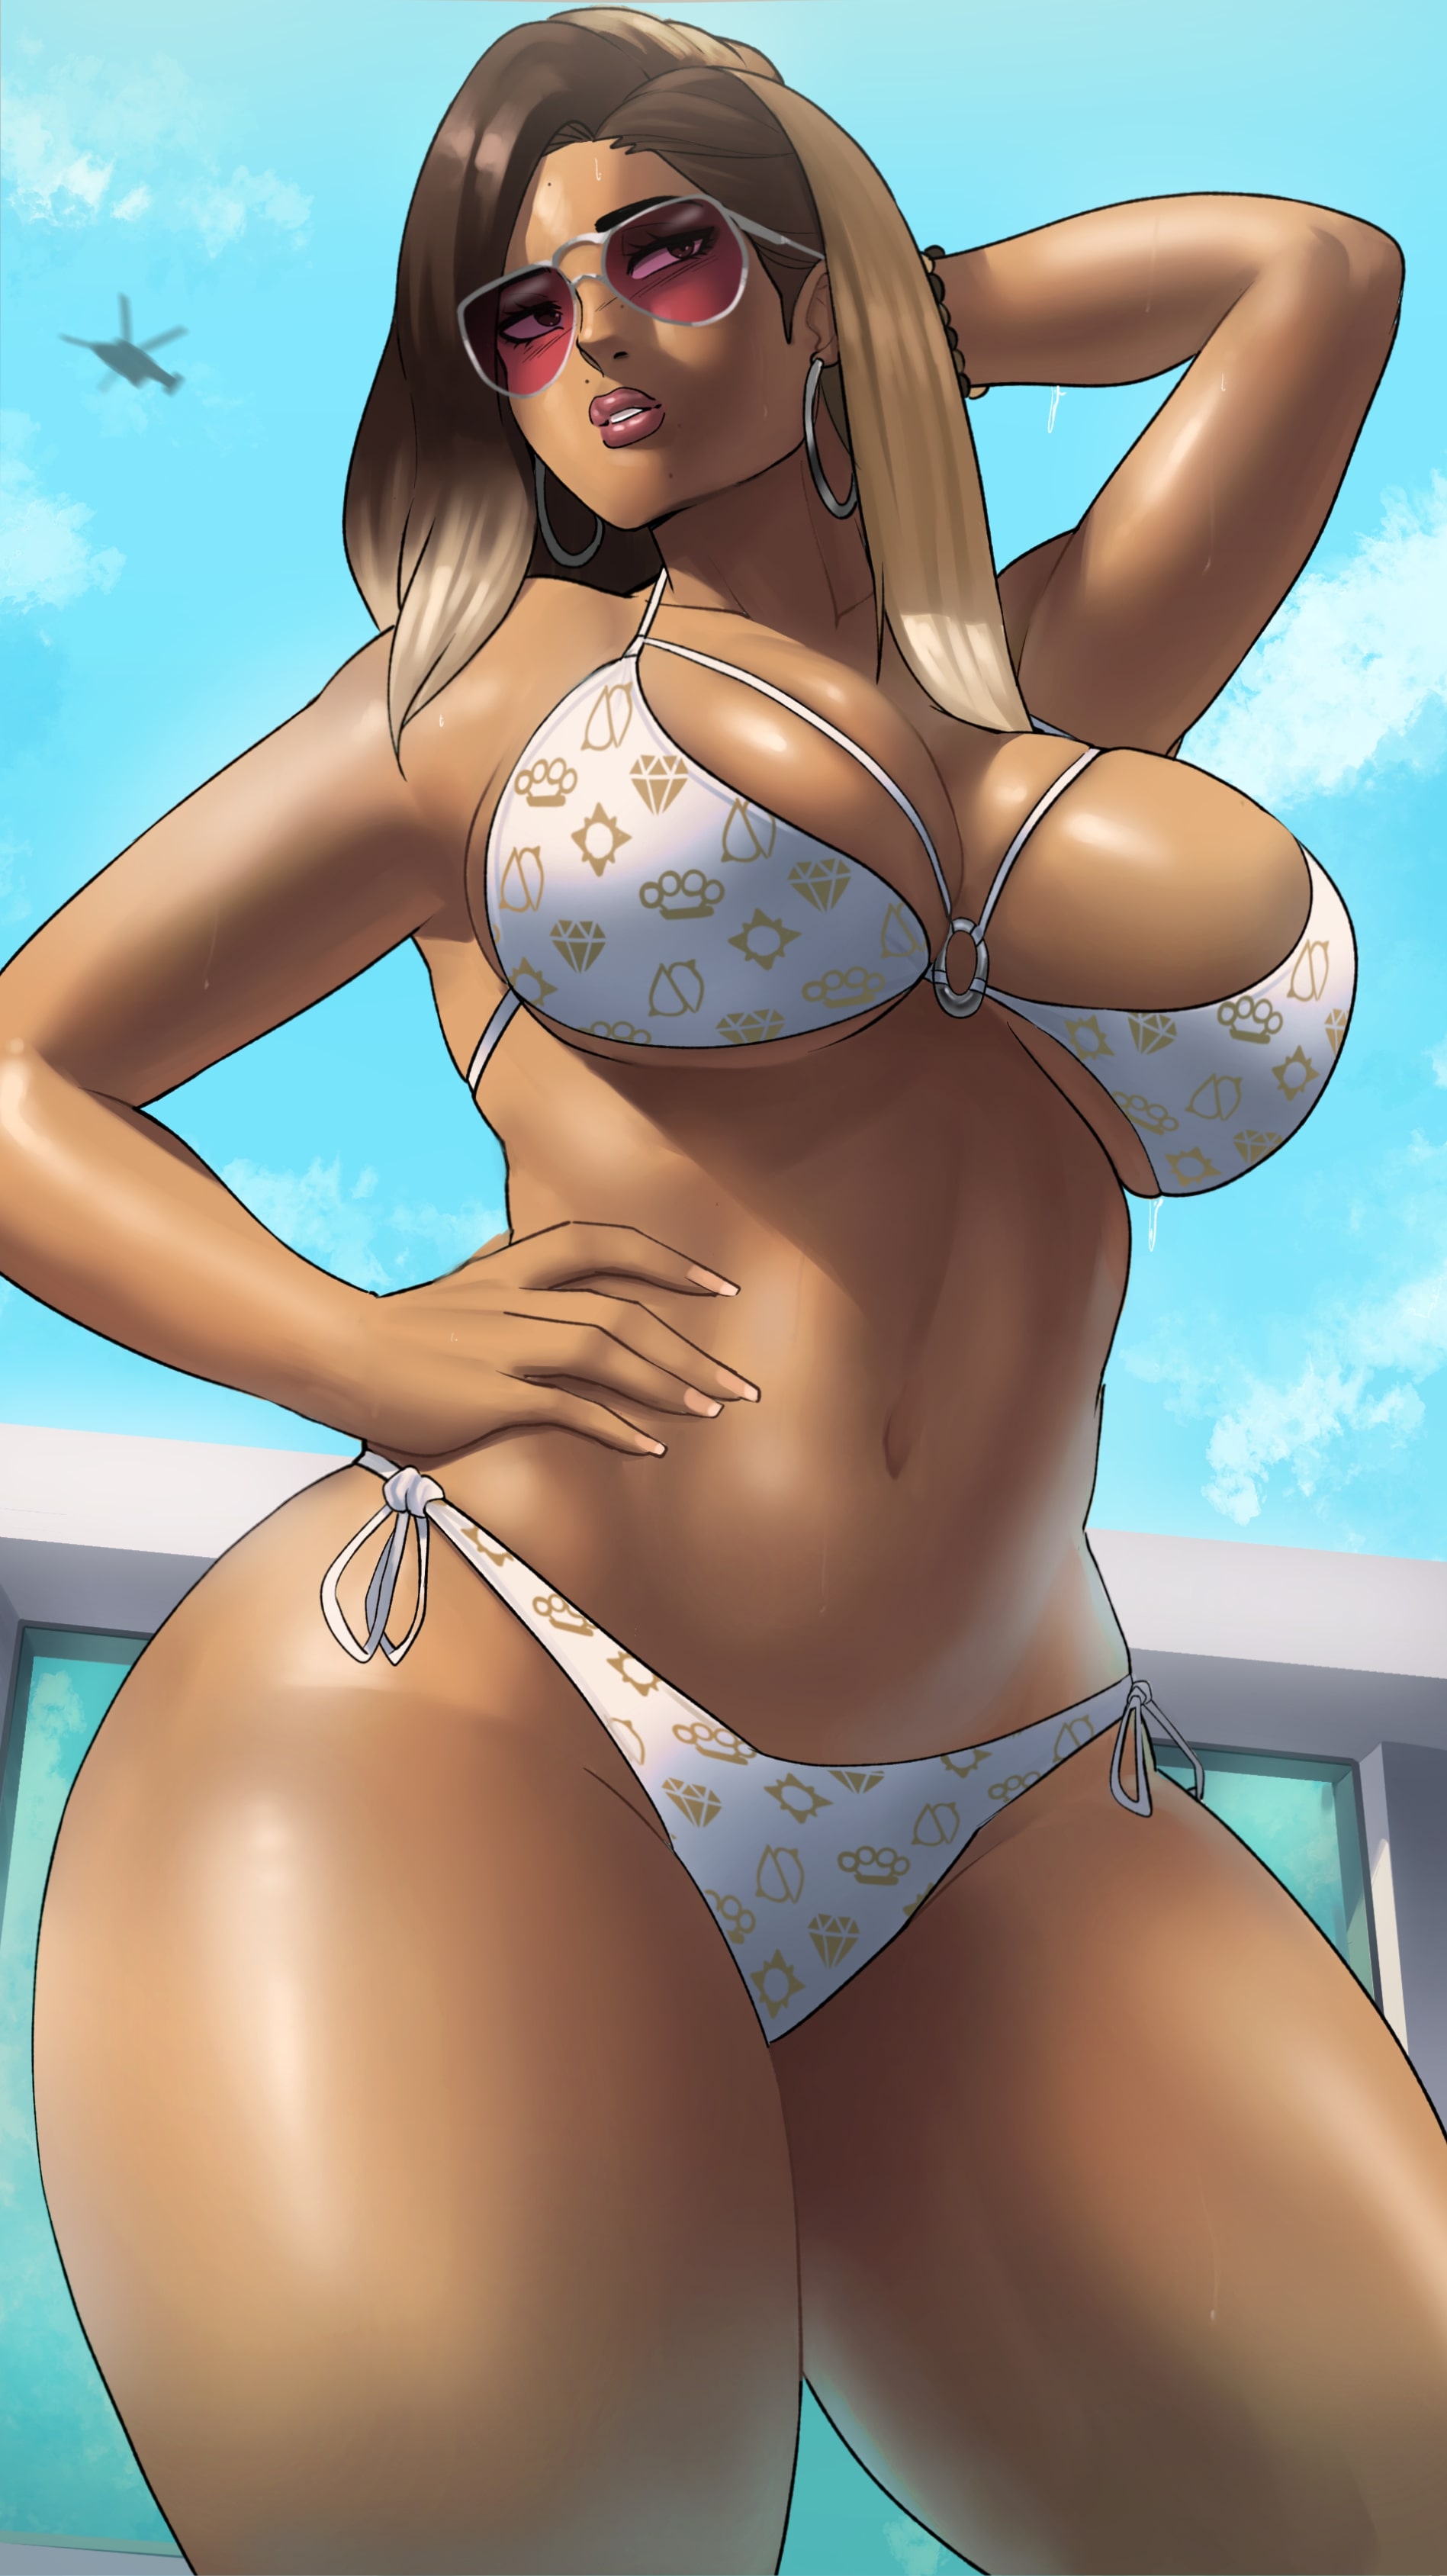 Lucia on Sexy Bikini by echosaber GTA 6